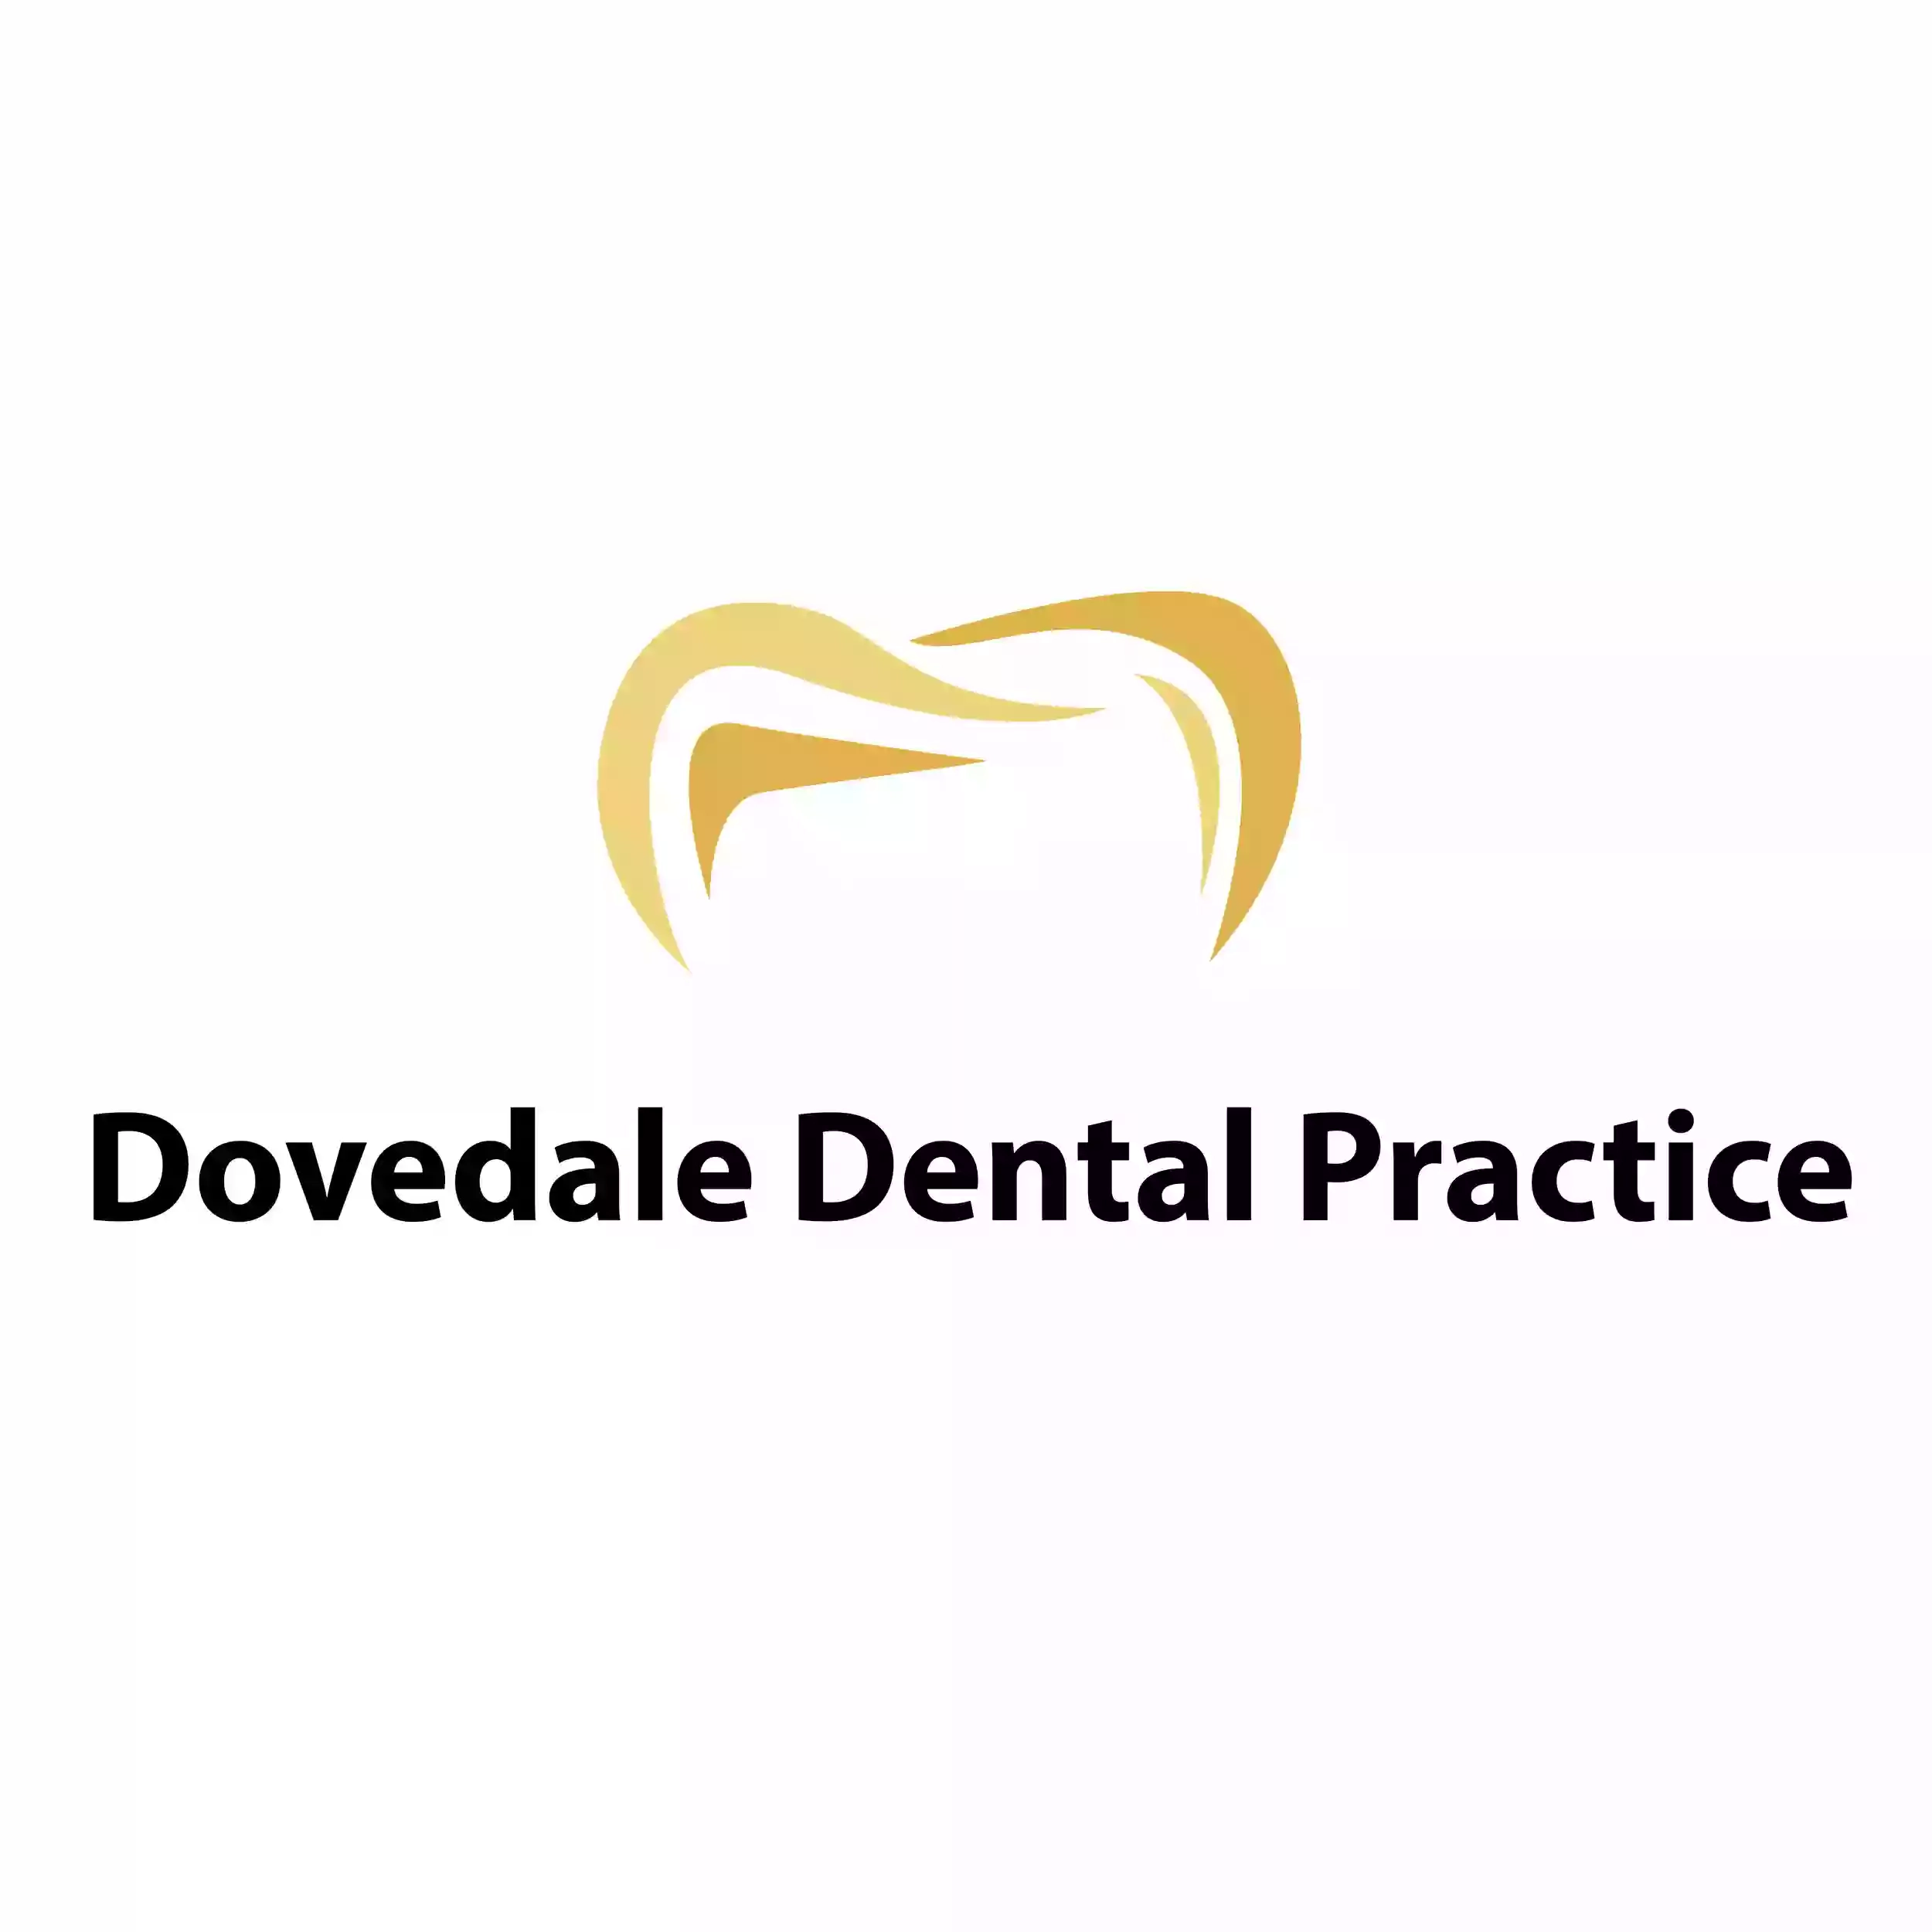 Dovedale Dental Practice